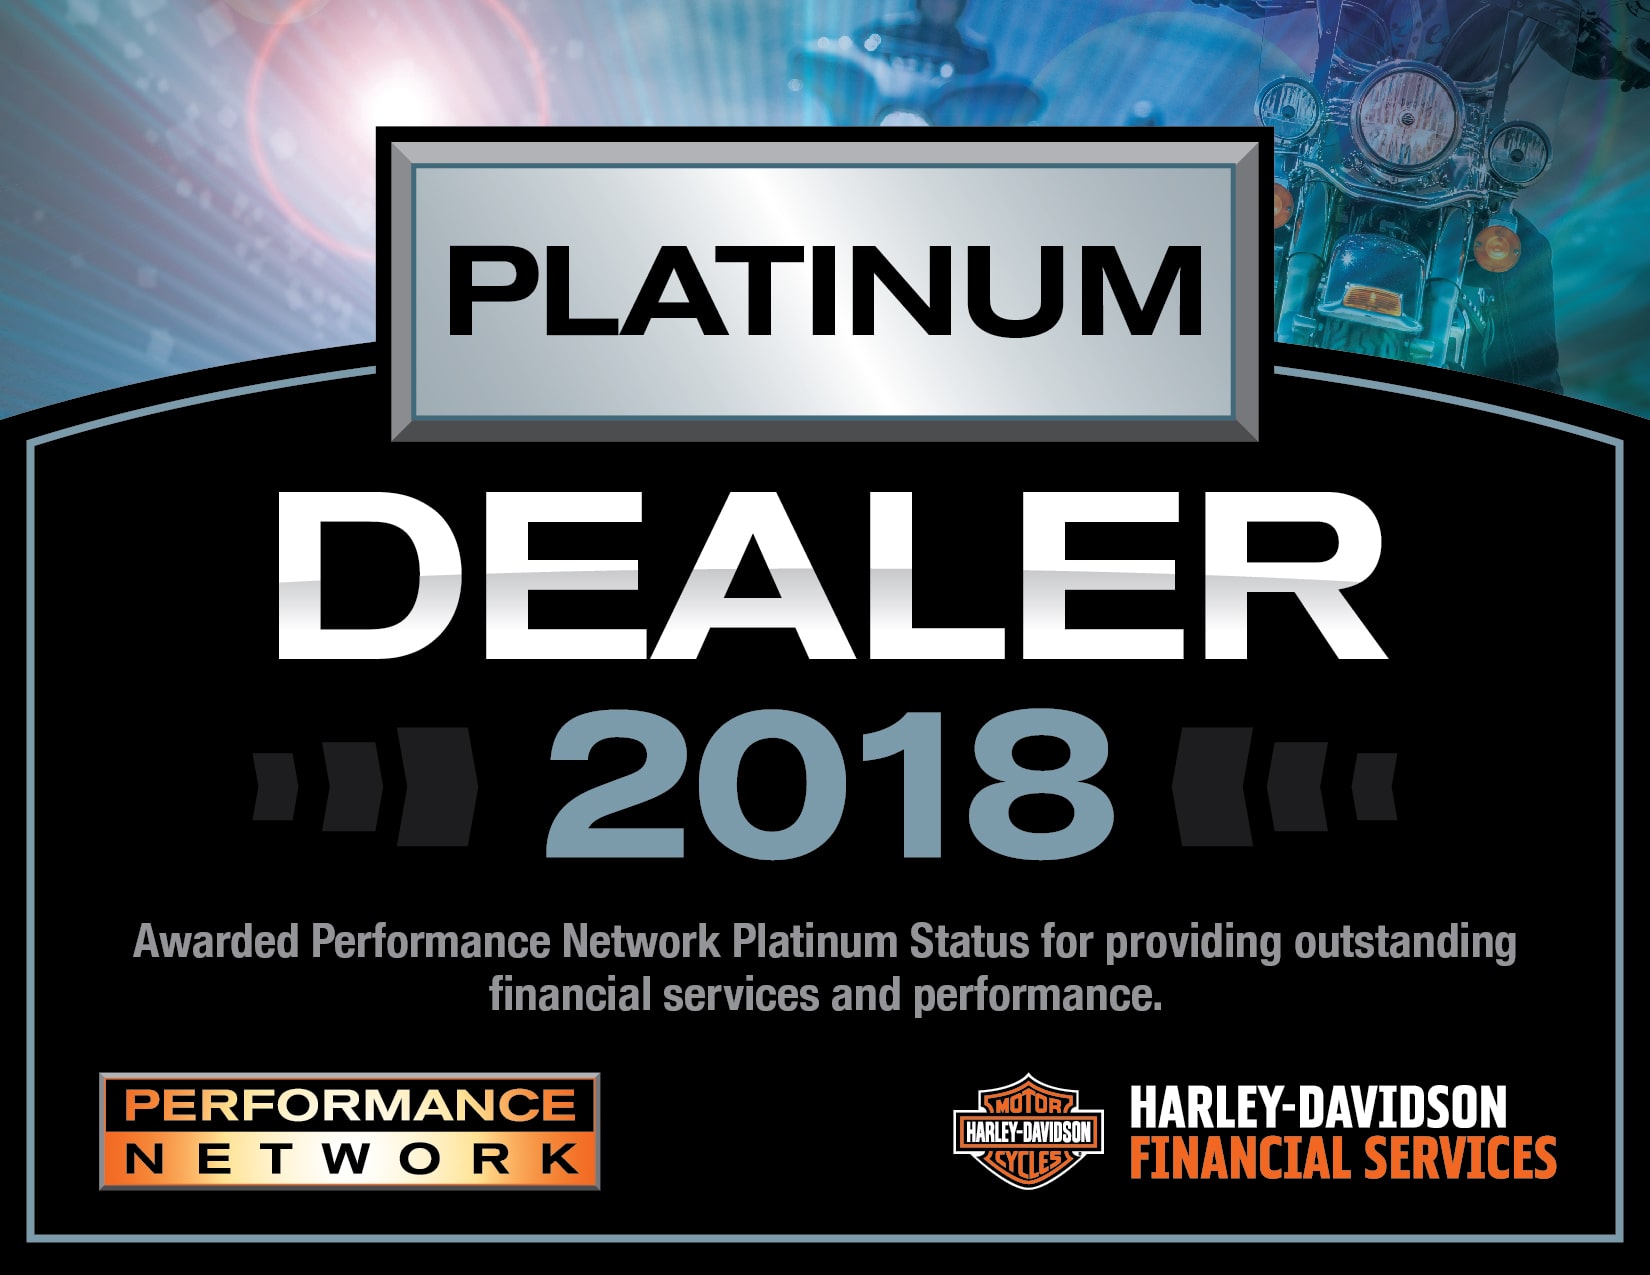 Platinum Dealer Award 2018